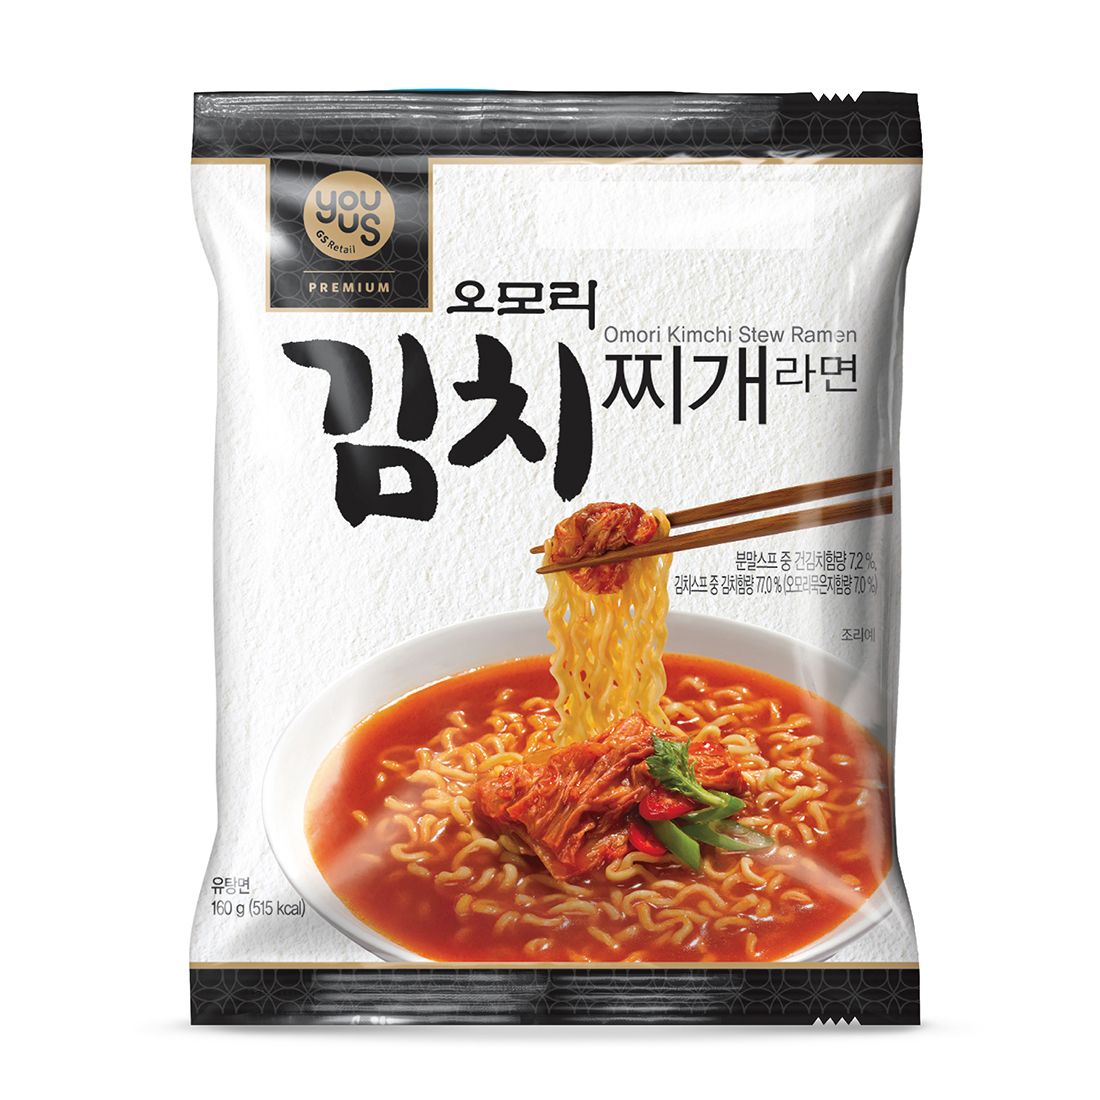 Omori Kimchi Stew Ramen มาม่า เกาหลี